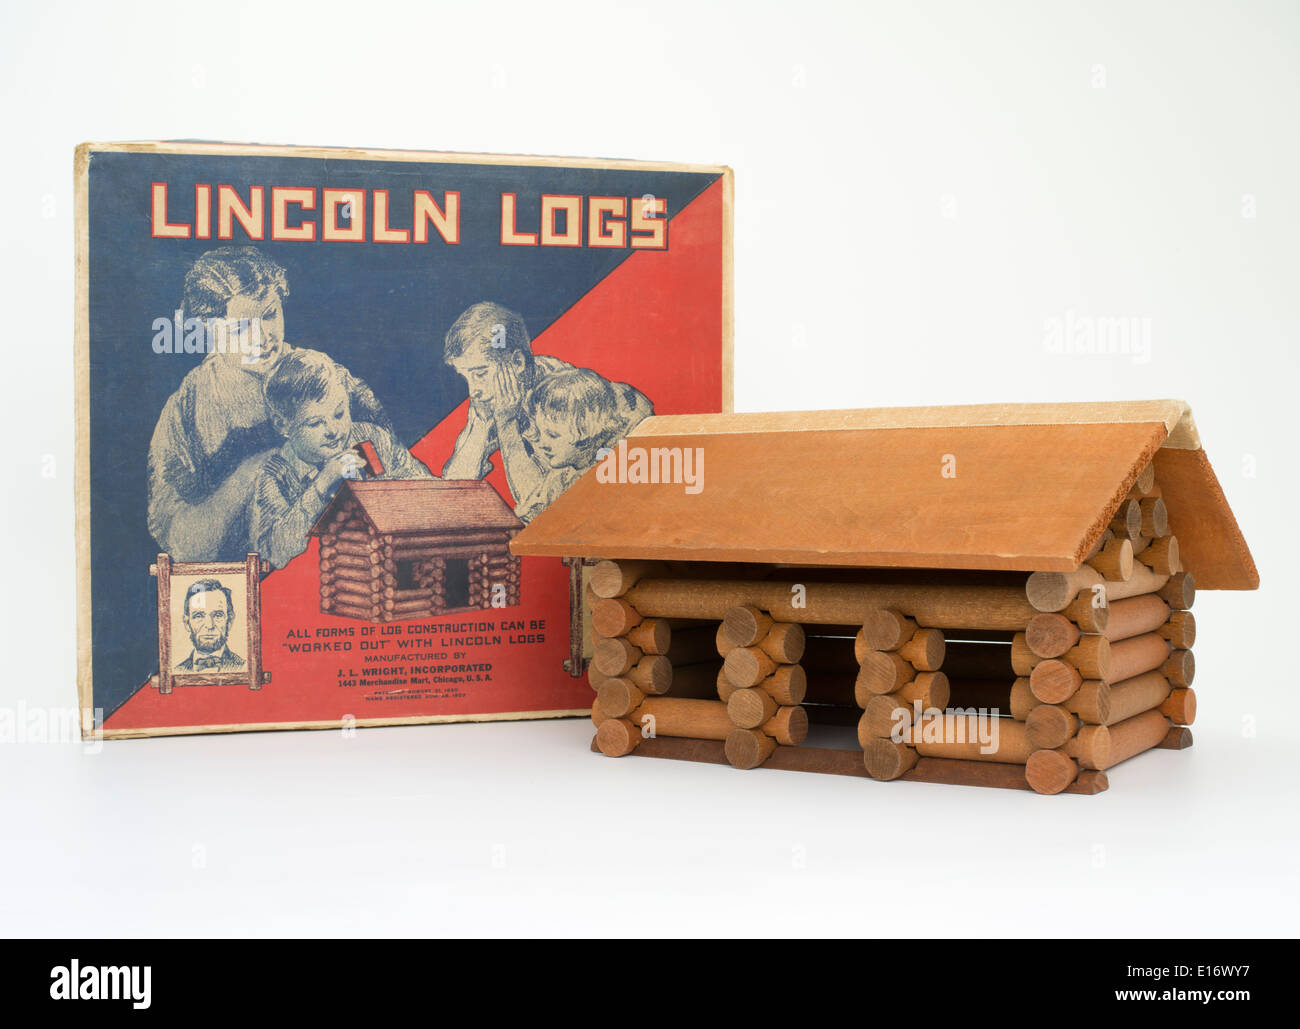 Lincoln Logs juguetes infantiles inventado por John Lloyd Wright un juguete nacional miembro del Salón de la Fama Foto de stock